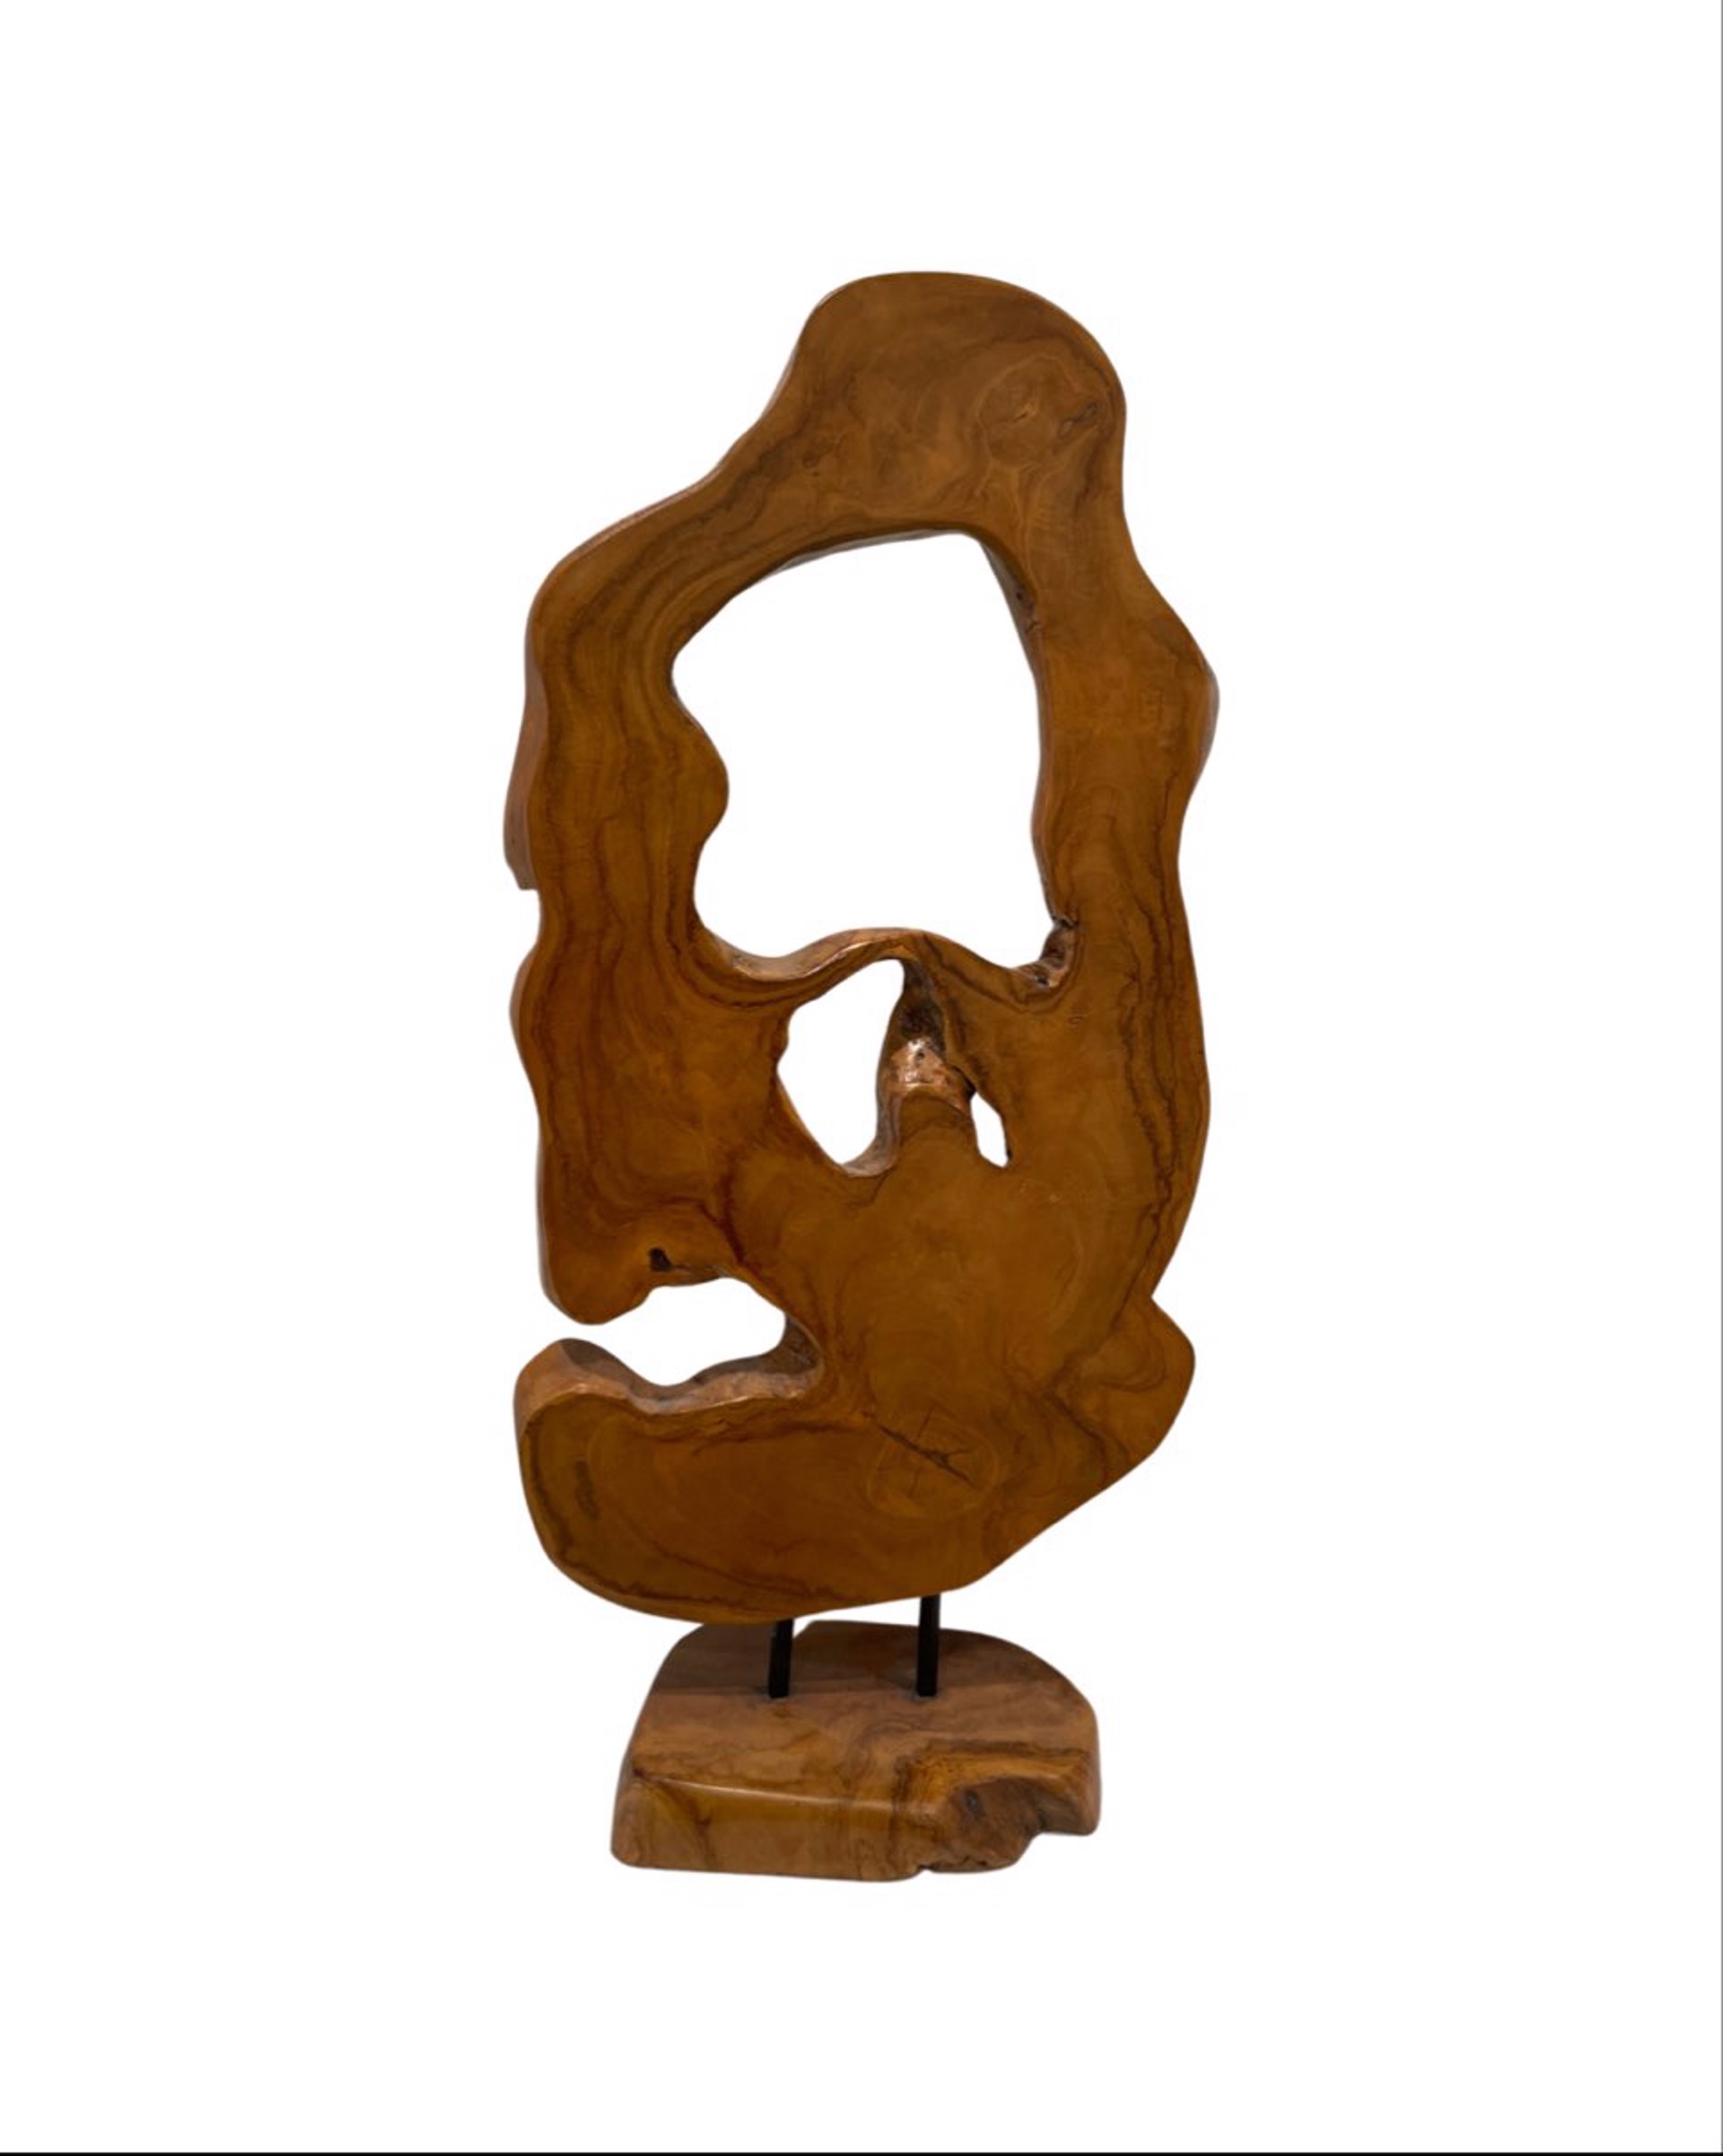 “Wood Swirl” by EBFA Wood Collection